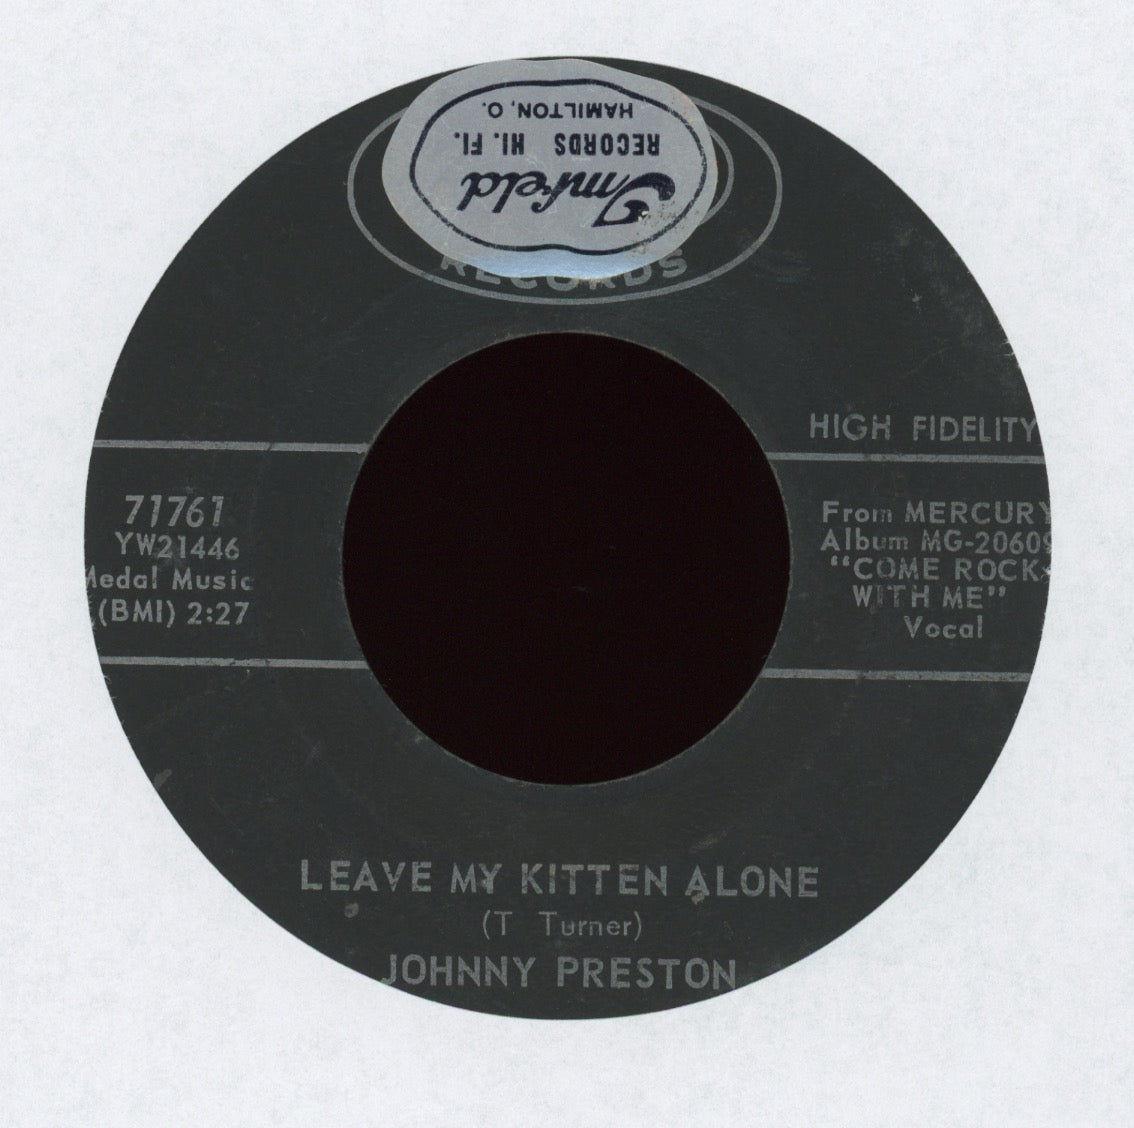 Johnny Preston - Leave My Kitten Alone on Mercury